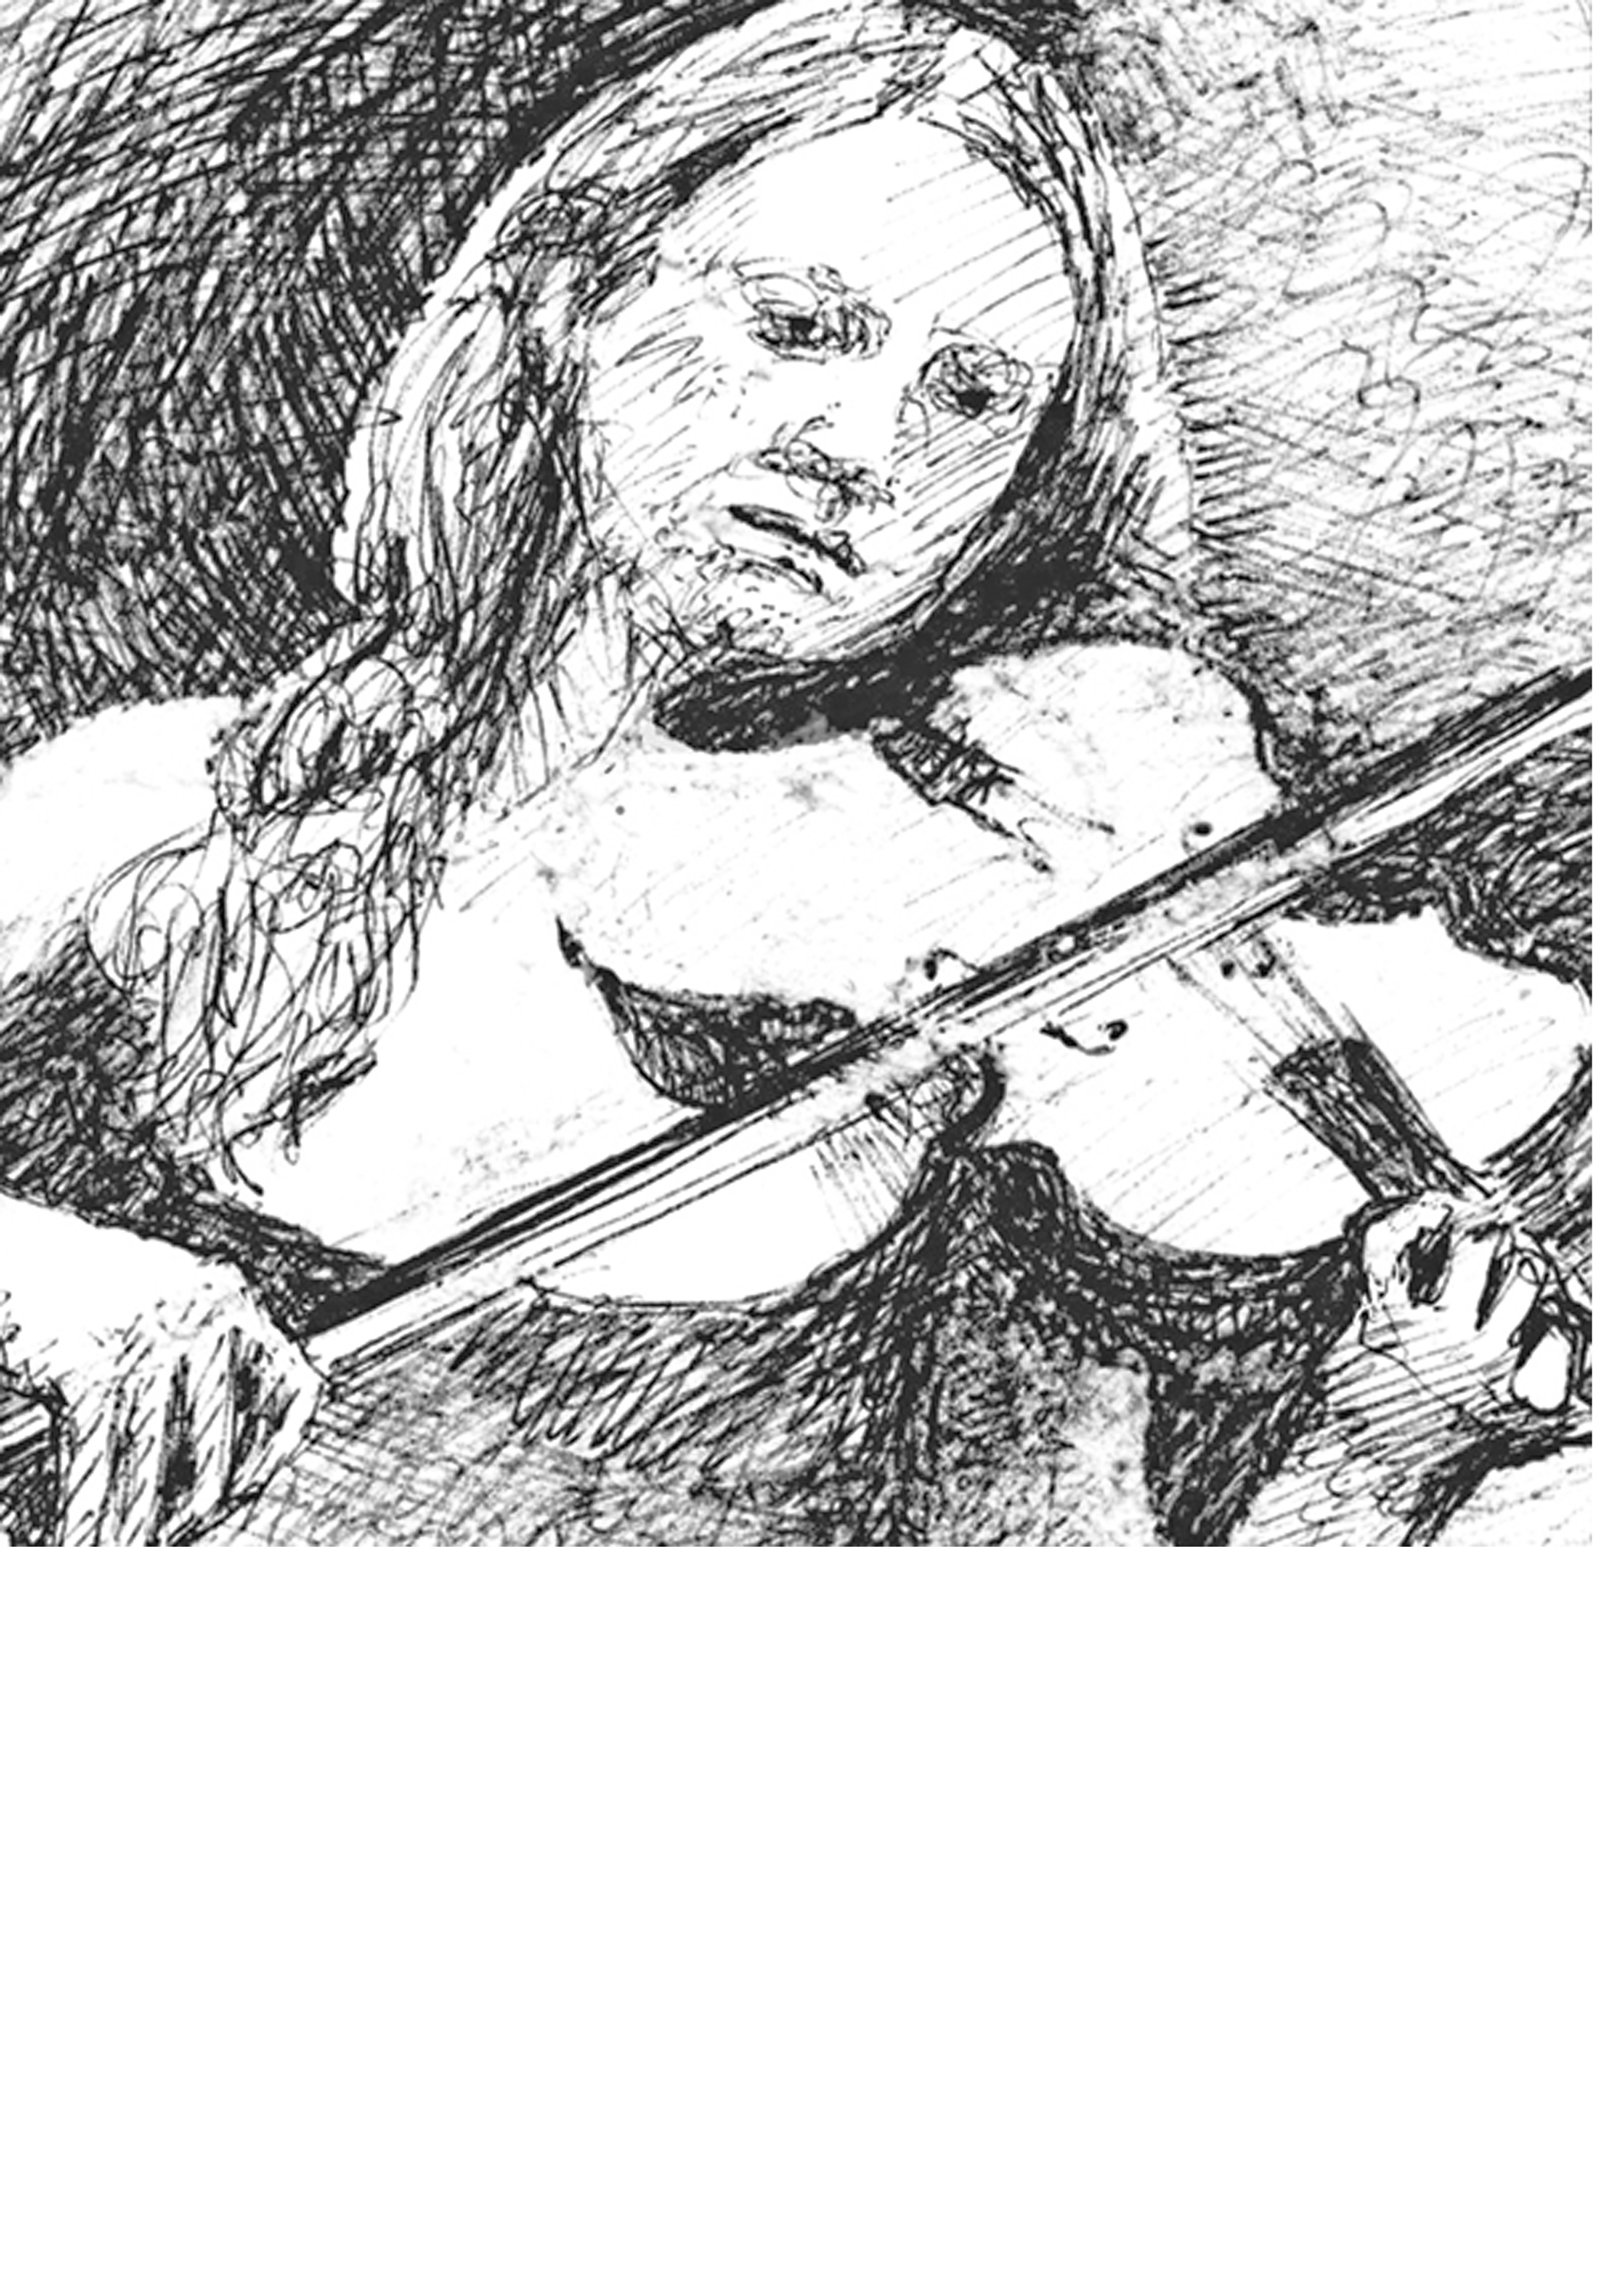 Viola player